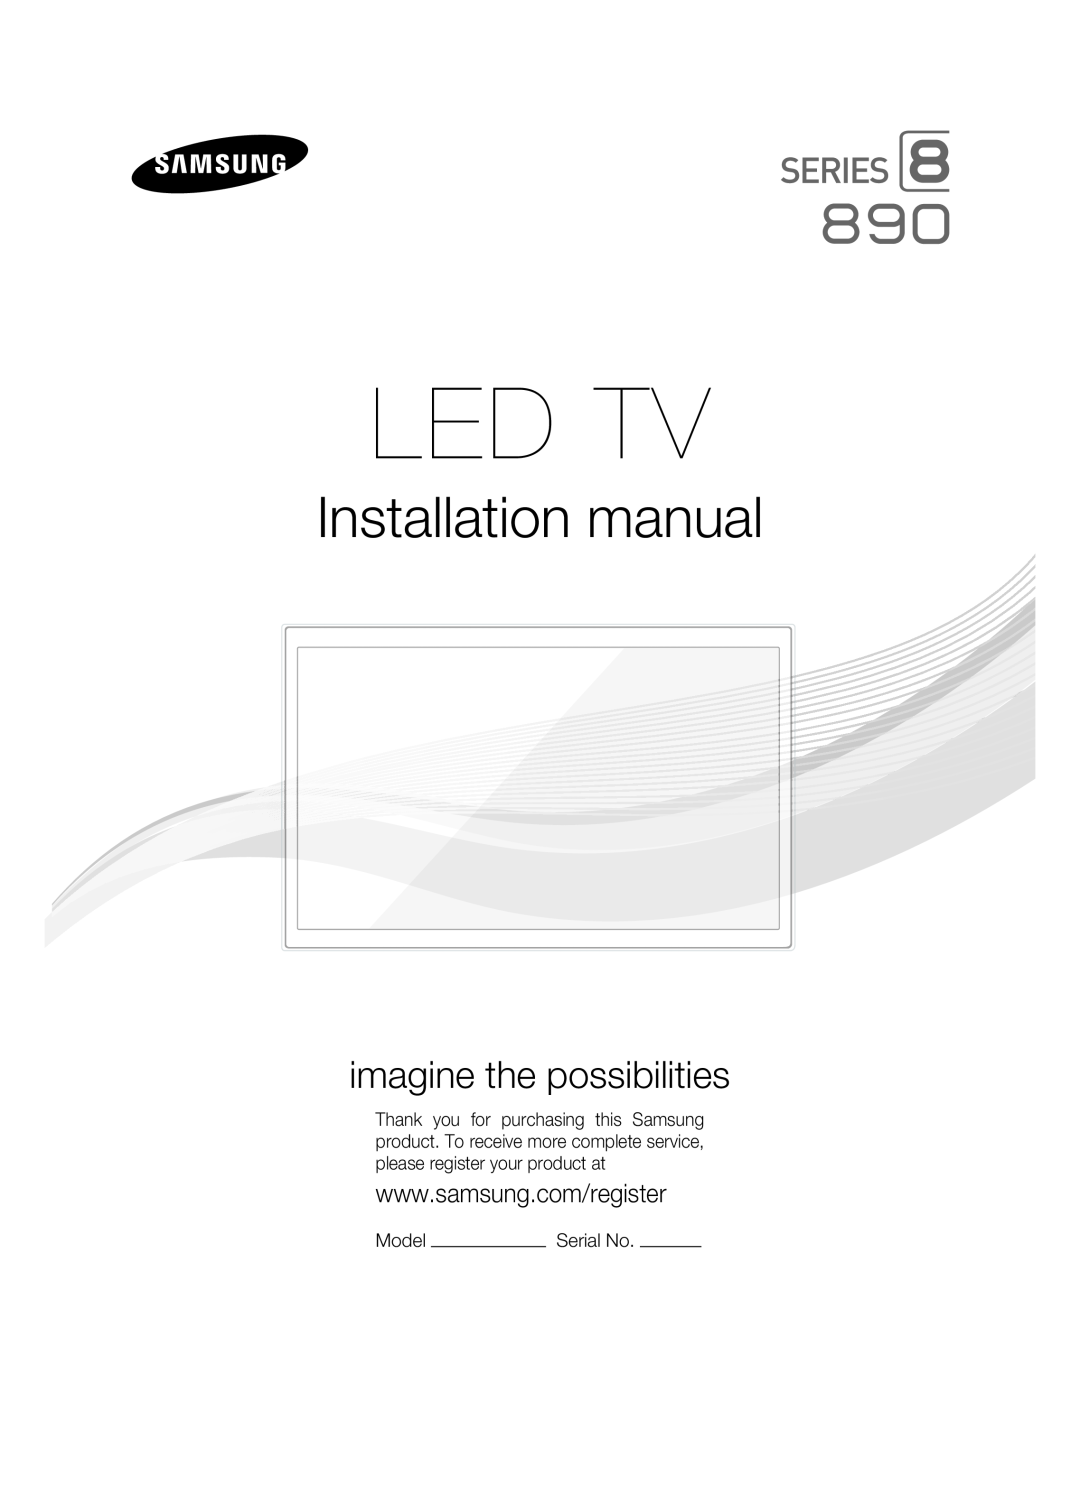 Samsung HG46NB890XFXZA, HG65NB890XFXZA installation manual Model, Led Tv, Installation manual, imagine the possibilities 